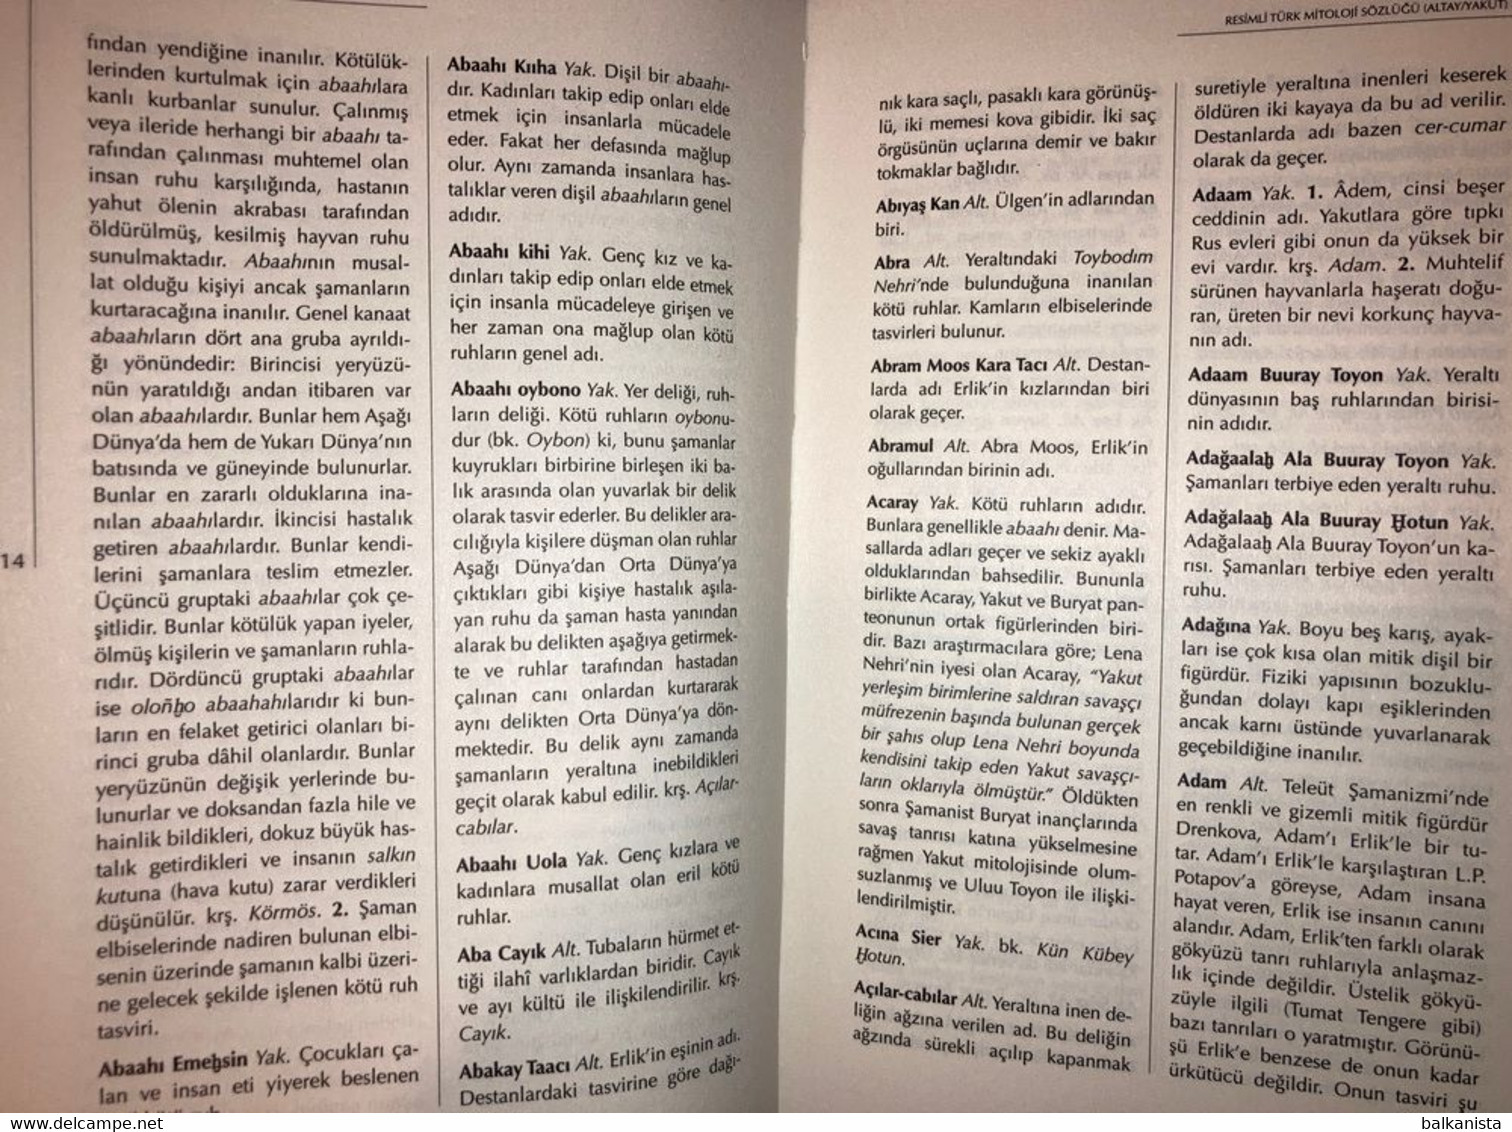 Turk Mitoloji Sozlugu - Turkish Turkic Mythology  Dictionary - Wörterbücher